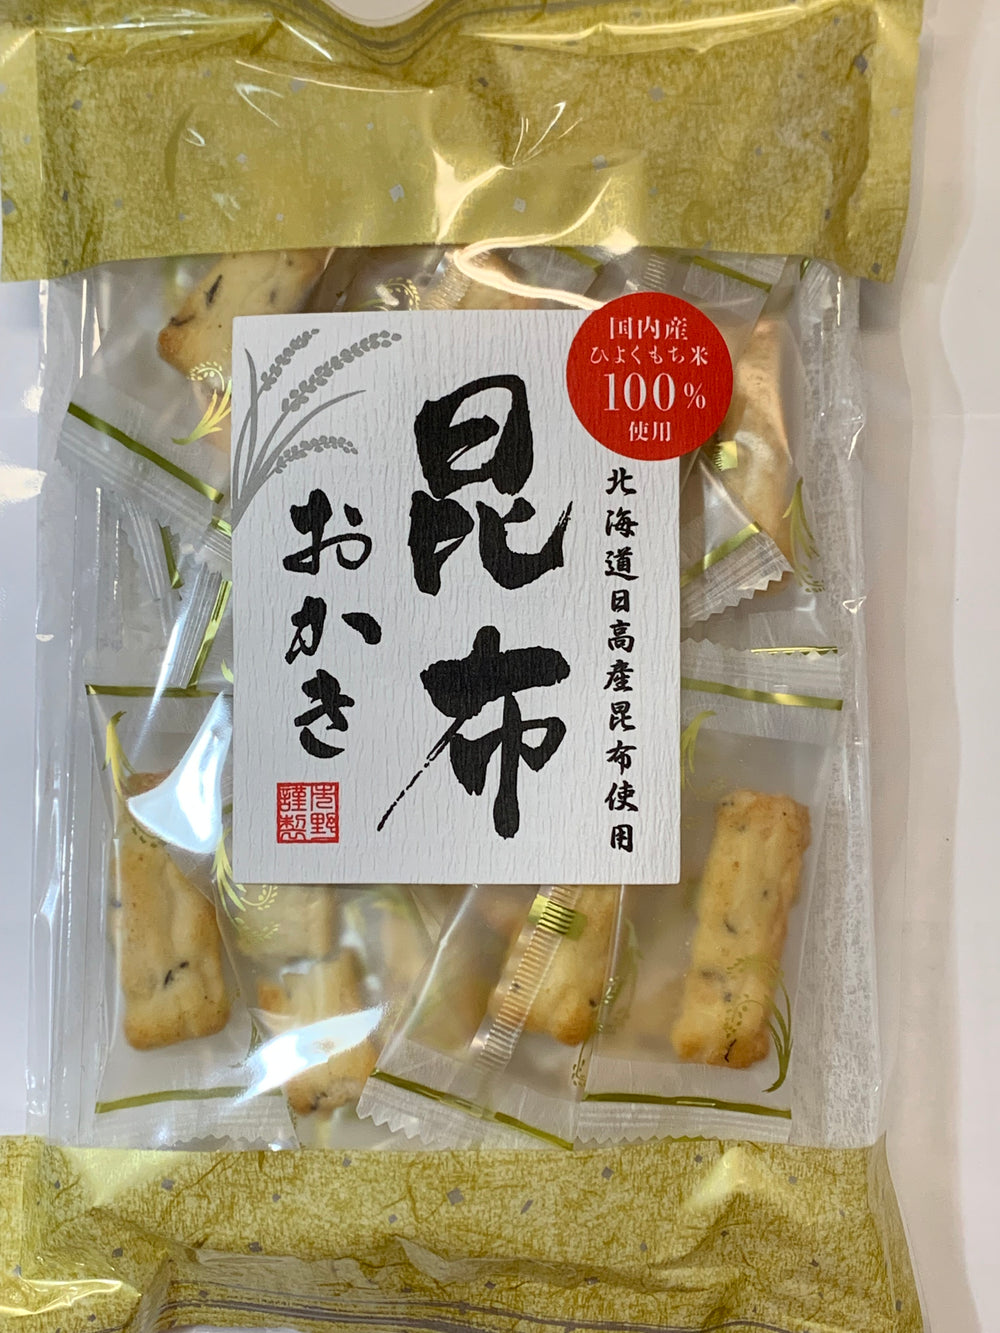 Kombu Rice Cracker / 昆布おかき  57g - Konbiniya Japan Centre